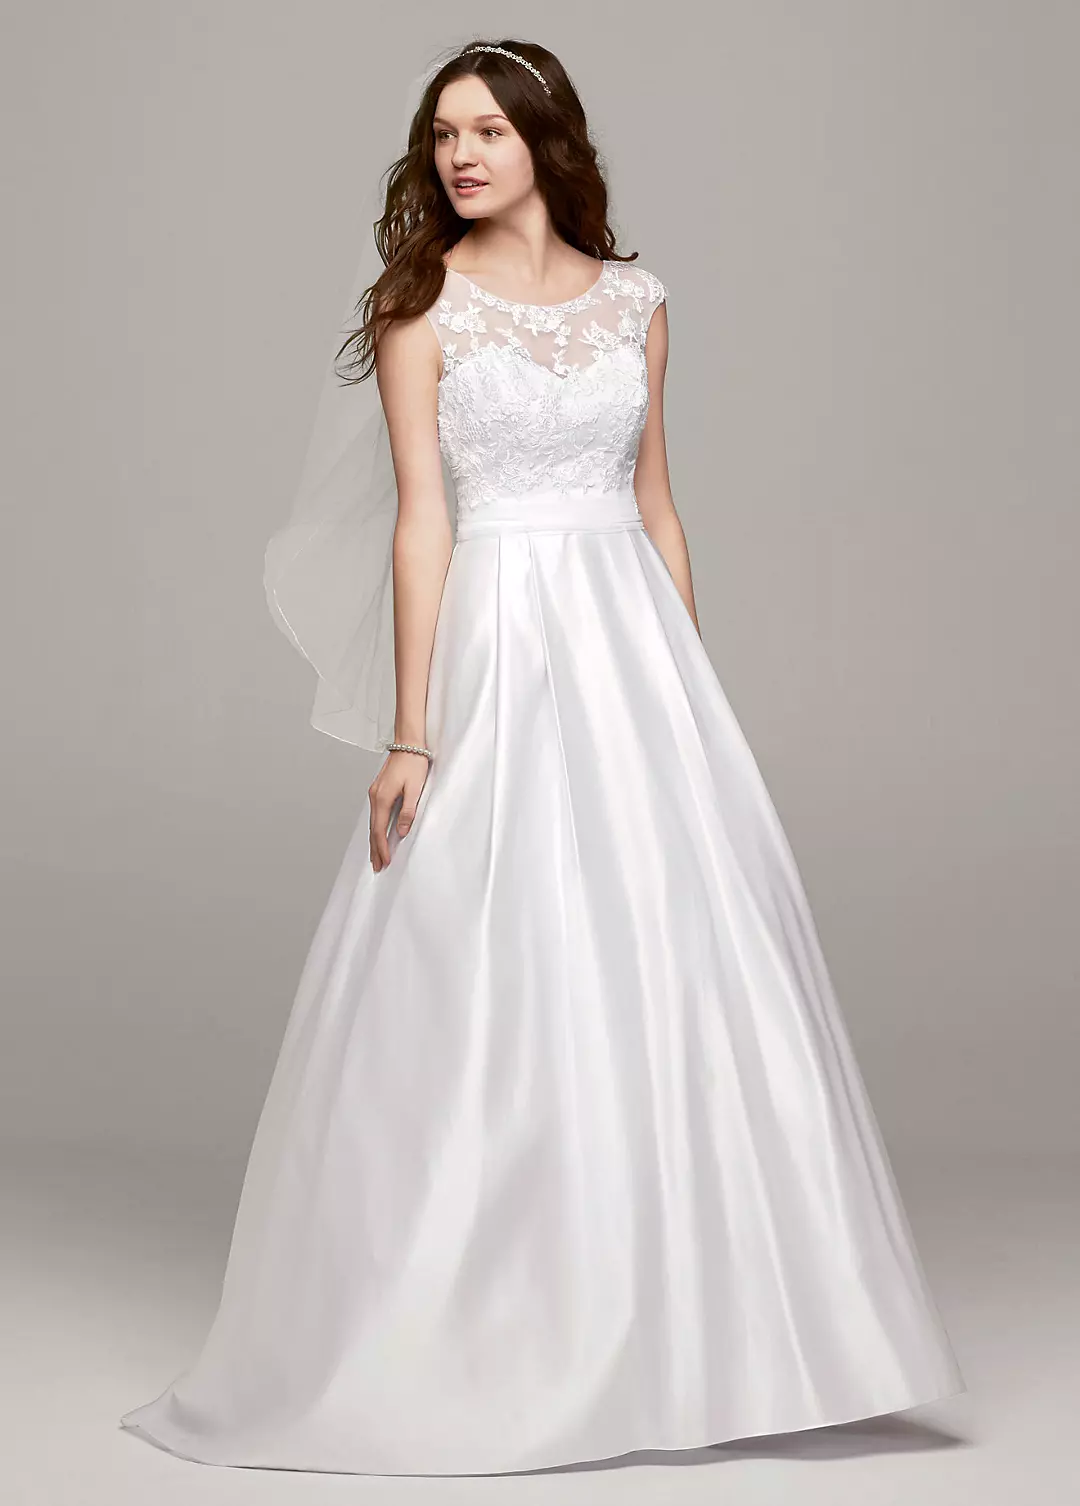 Cap Sleeve Wedding Dress with Illusion Neckline  Image